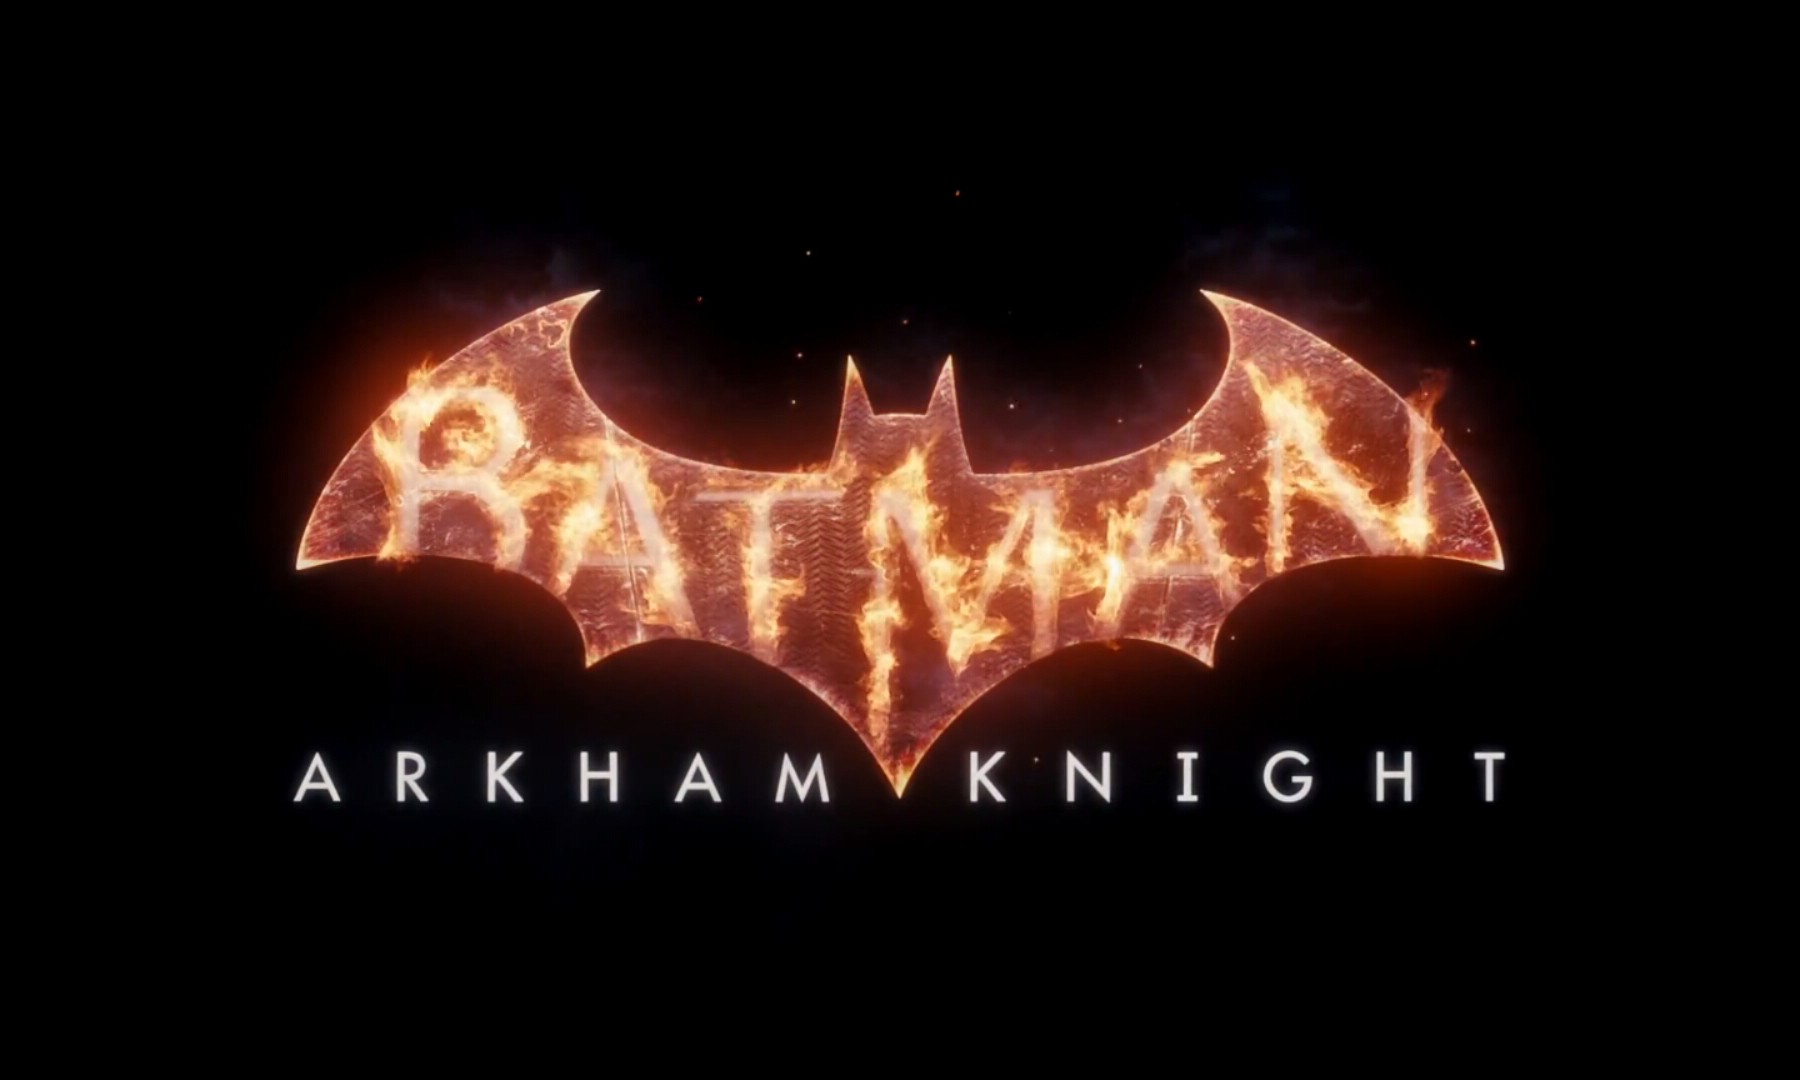 《Batman: Arkham Knight》发布 “All Who Follow You” 预告片